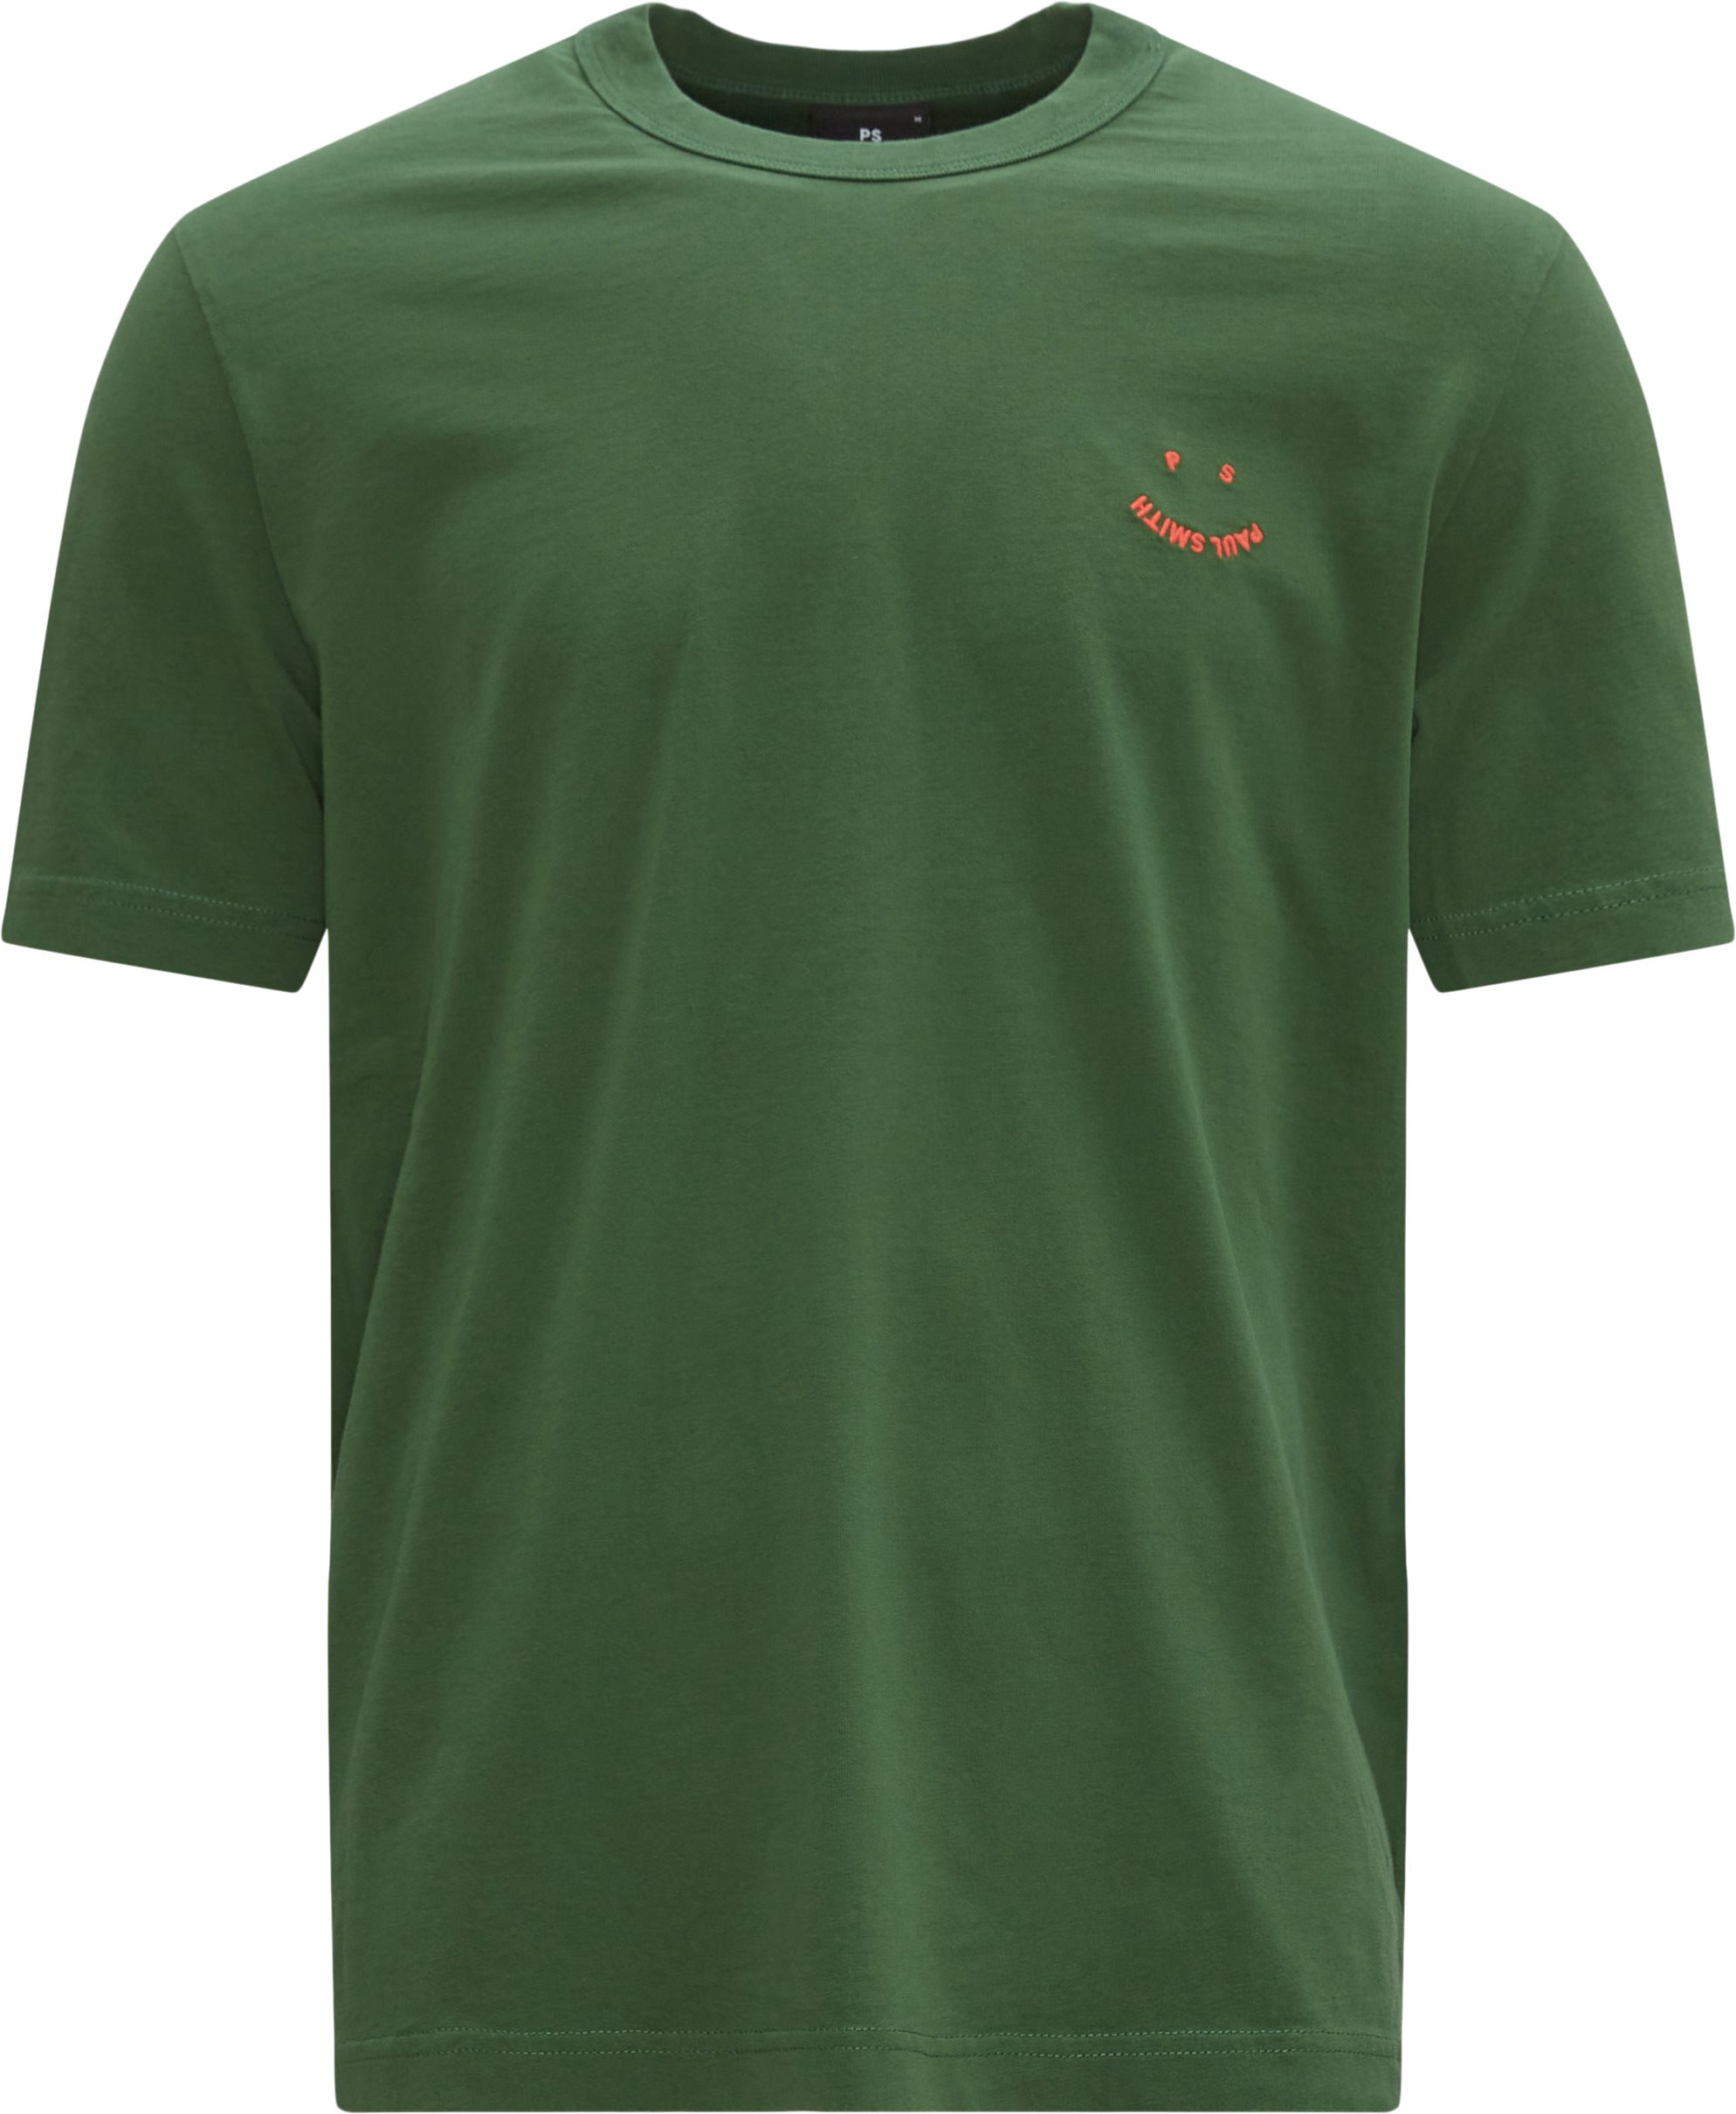 T-shirts - Regular fit - Grøn